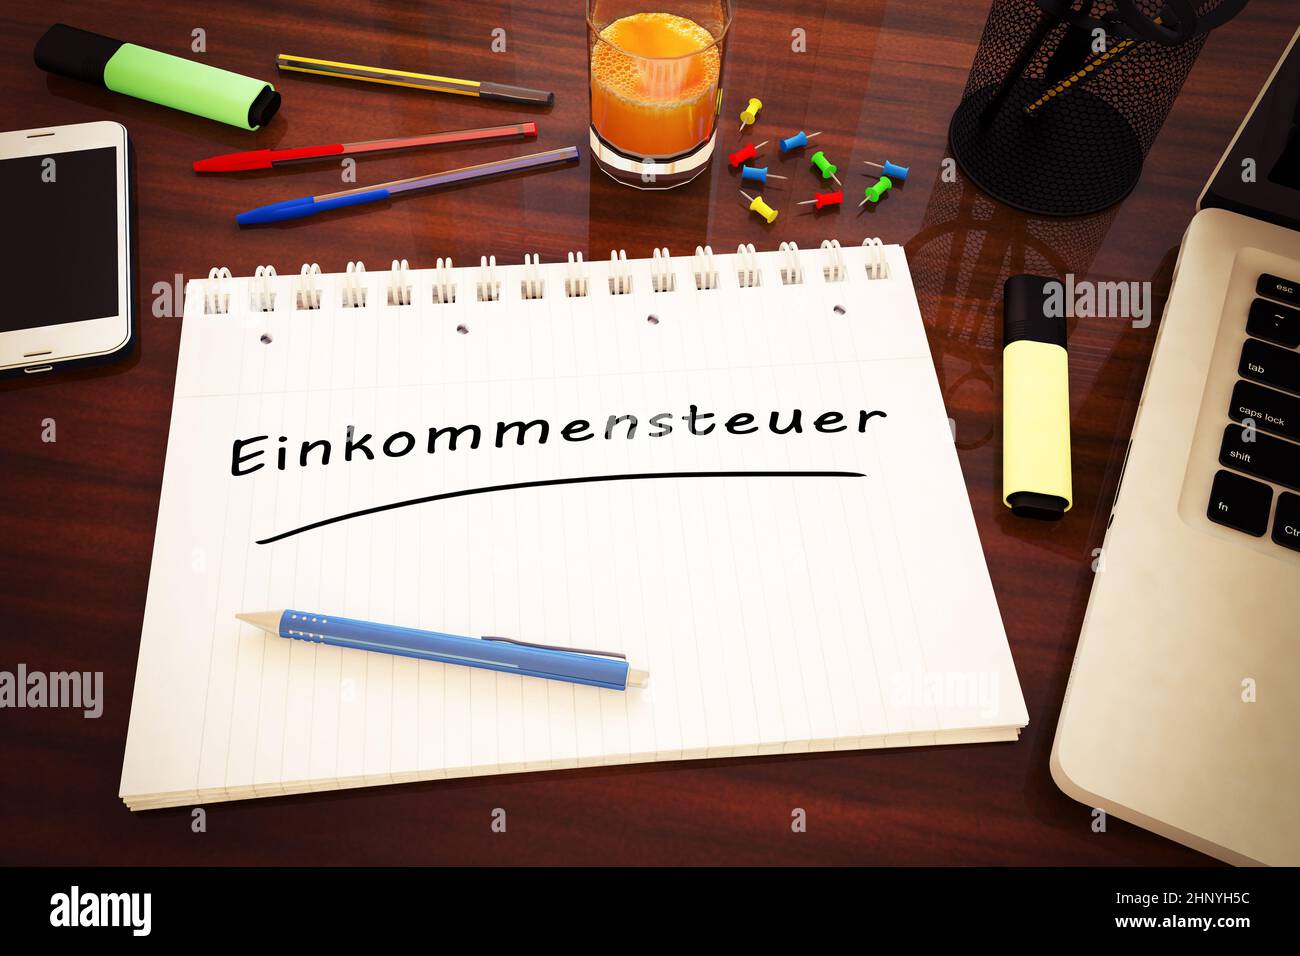 Einkommensteuer - german word for income tax - handwritten text in a notebook on a desk - 3d render illustration. Stock Photo